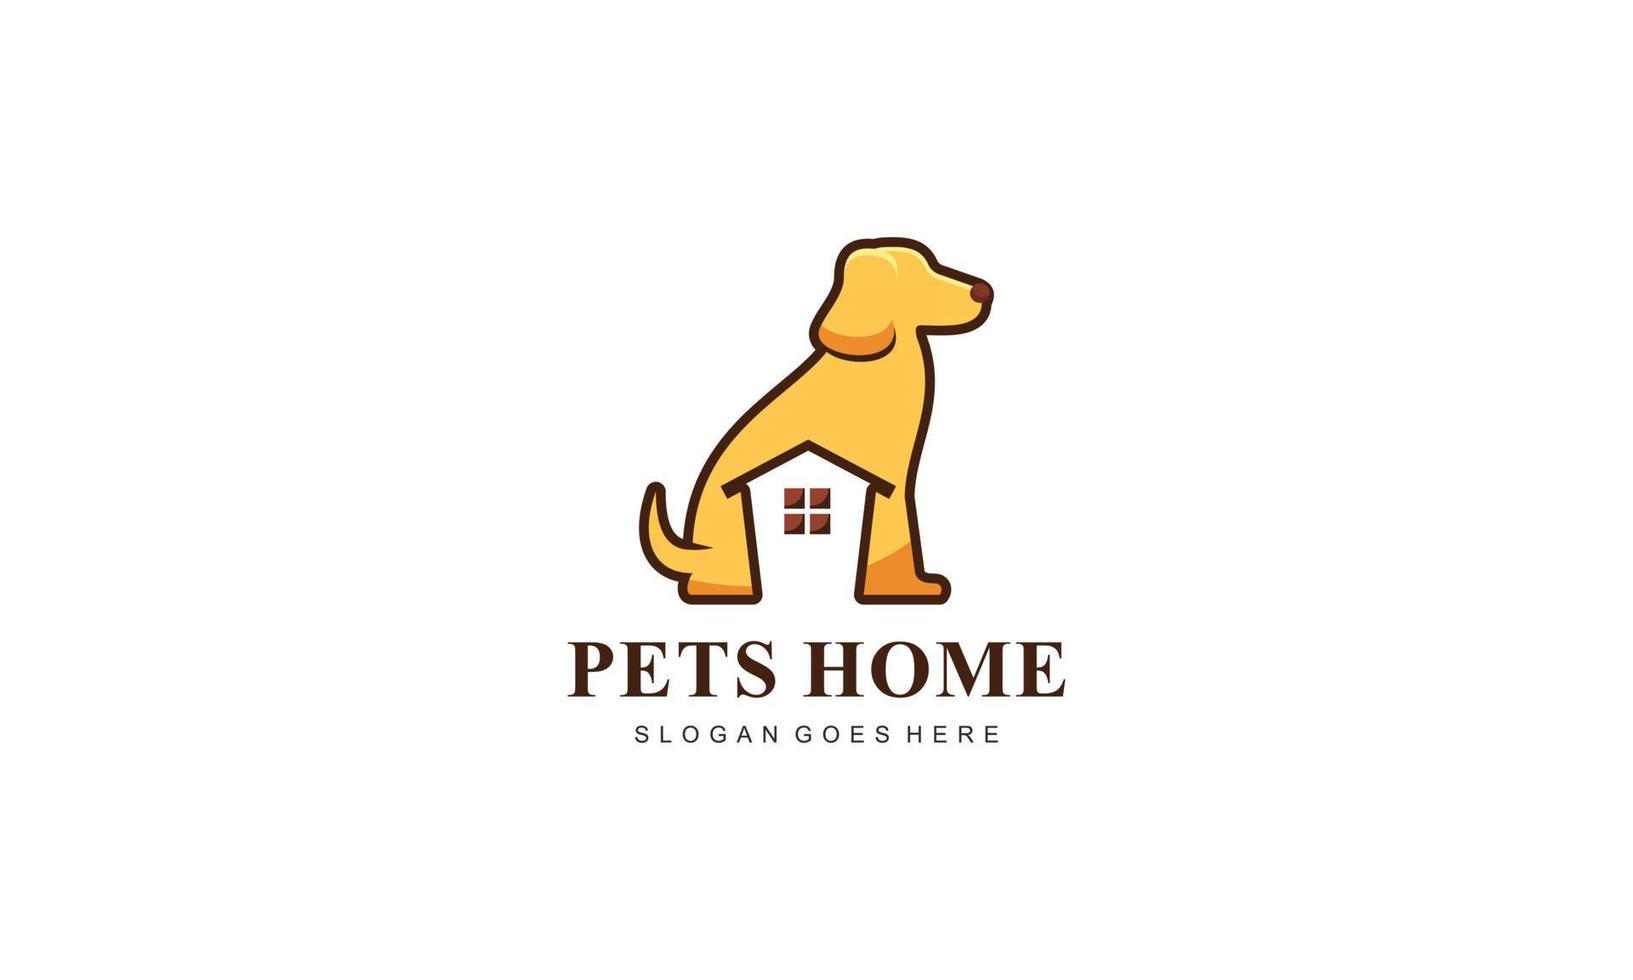 Pet home mascot cartoon style illustration vector